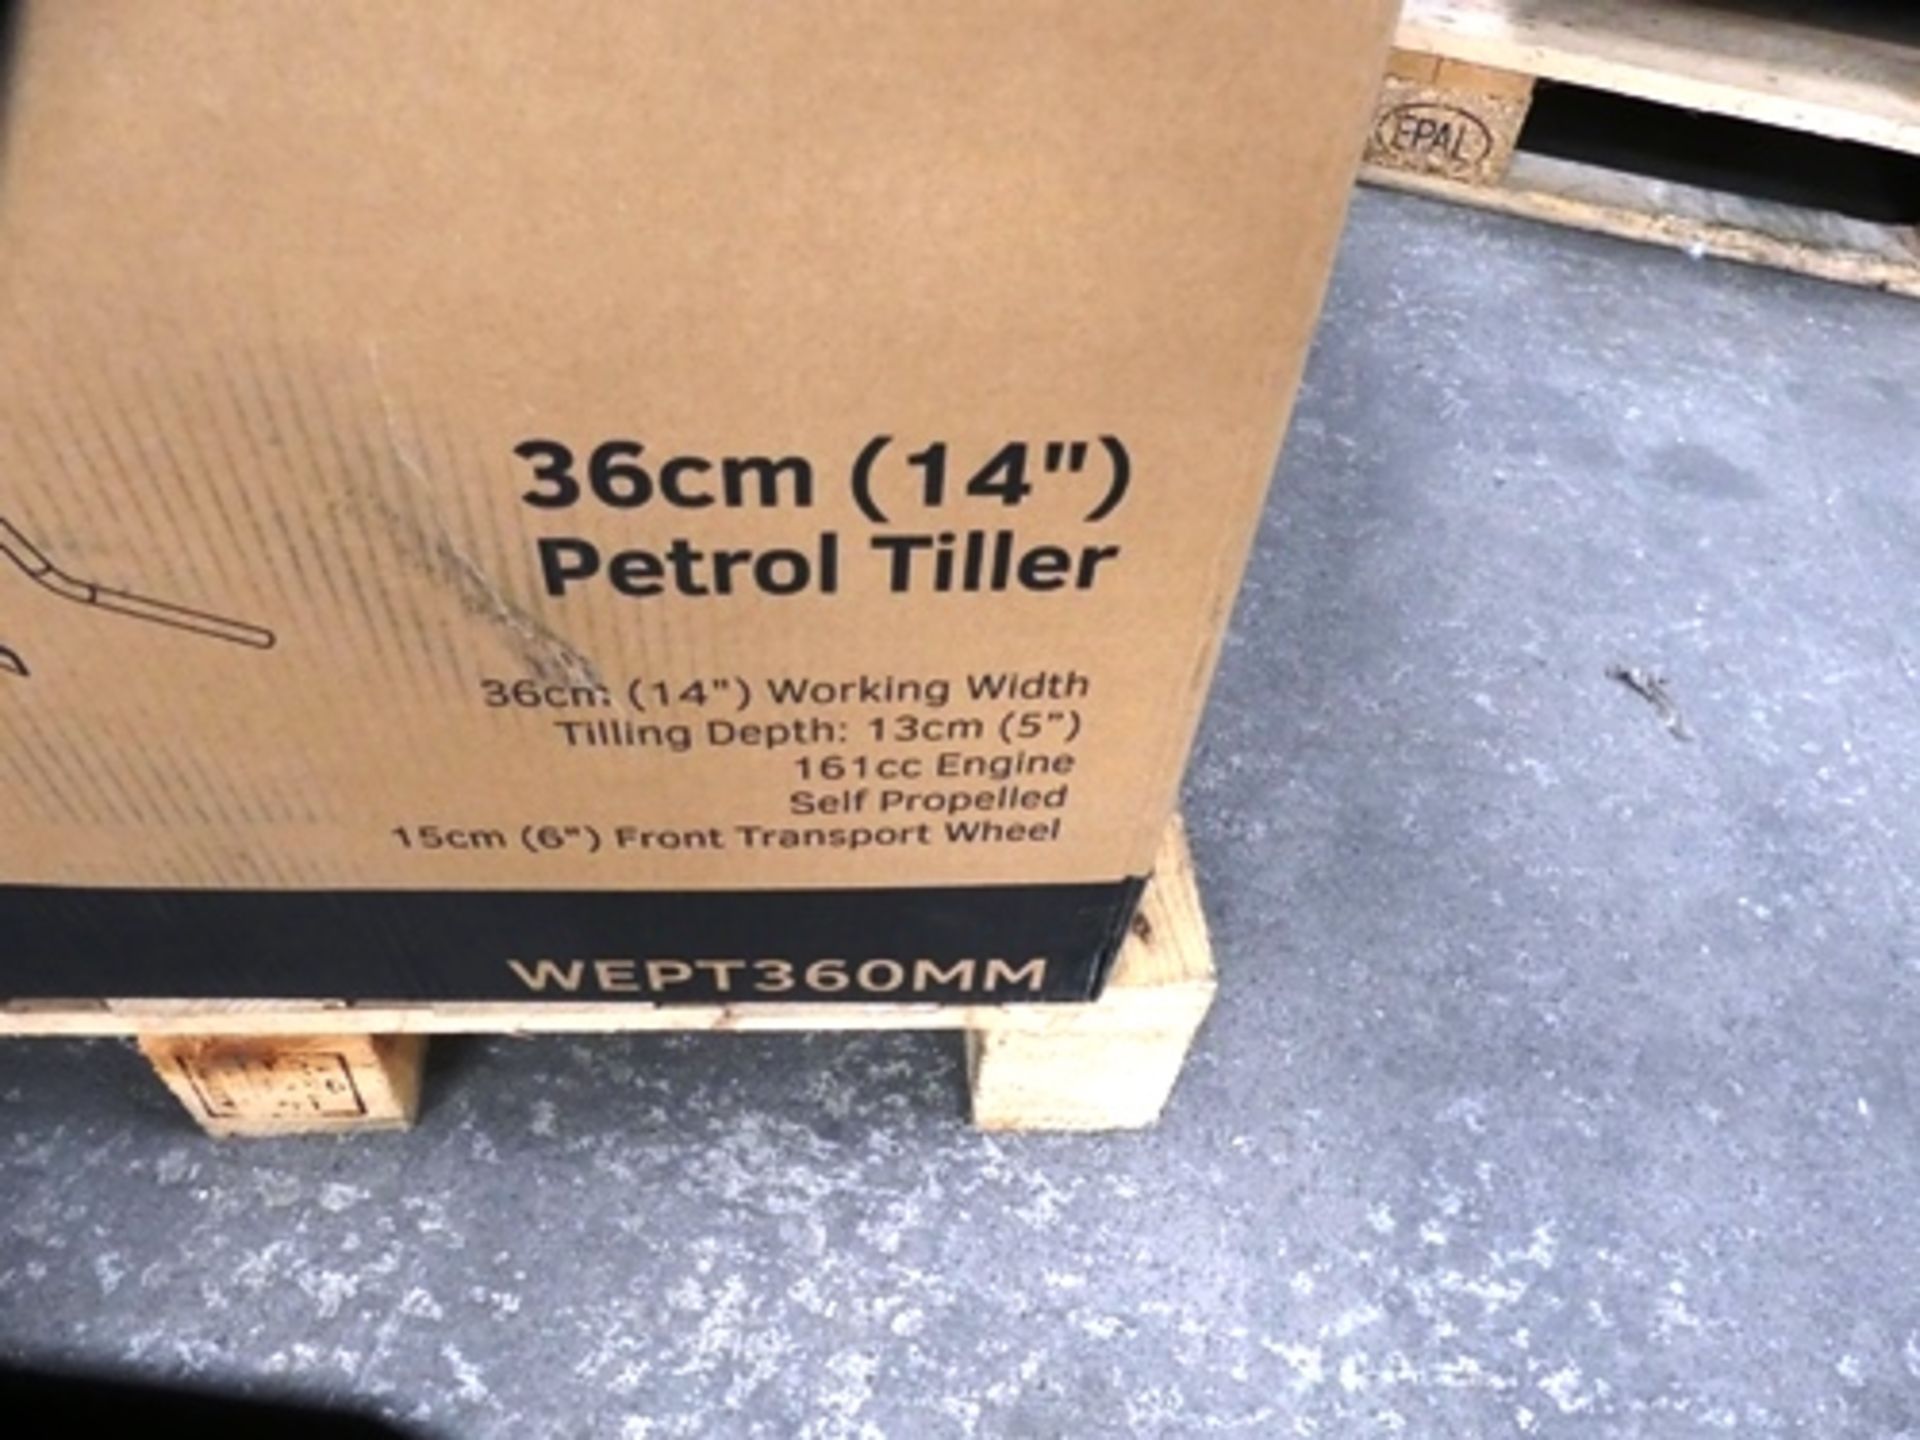 1 x Webb 36cm (14") petrol tiller, Model WEPT360MM - Sealed new in box (GS35) - Image 2 of 2